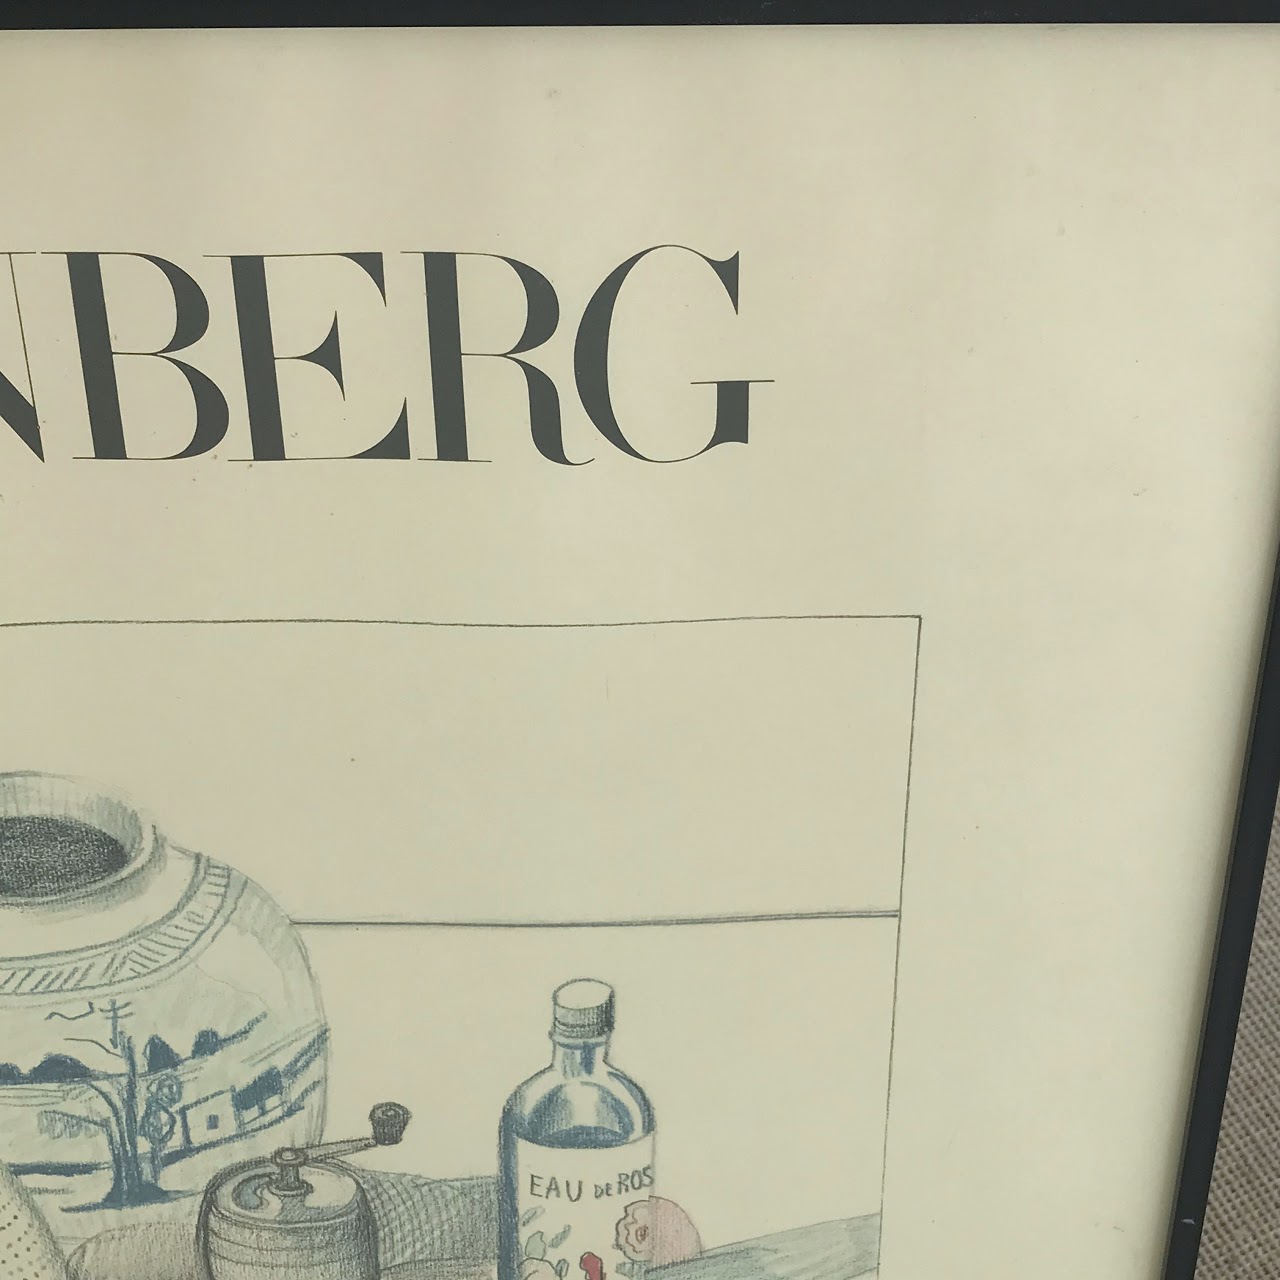 Saul Steinberg Exhibition Poster